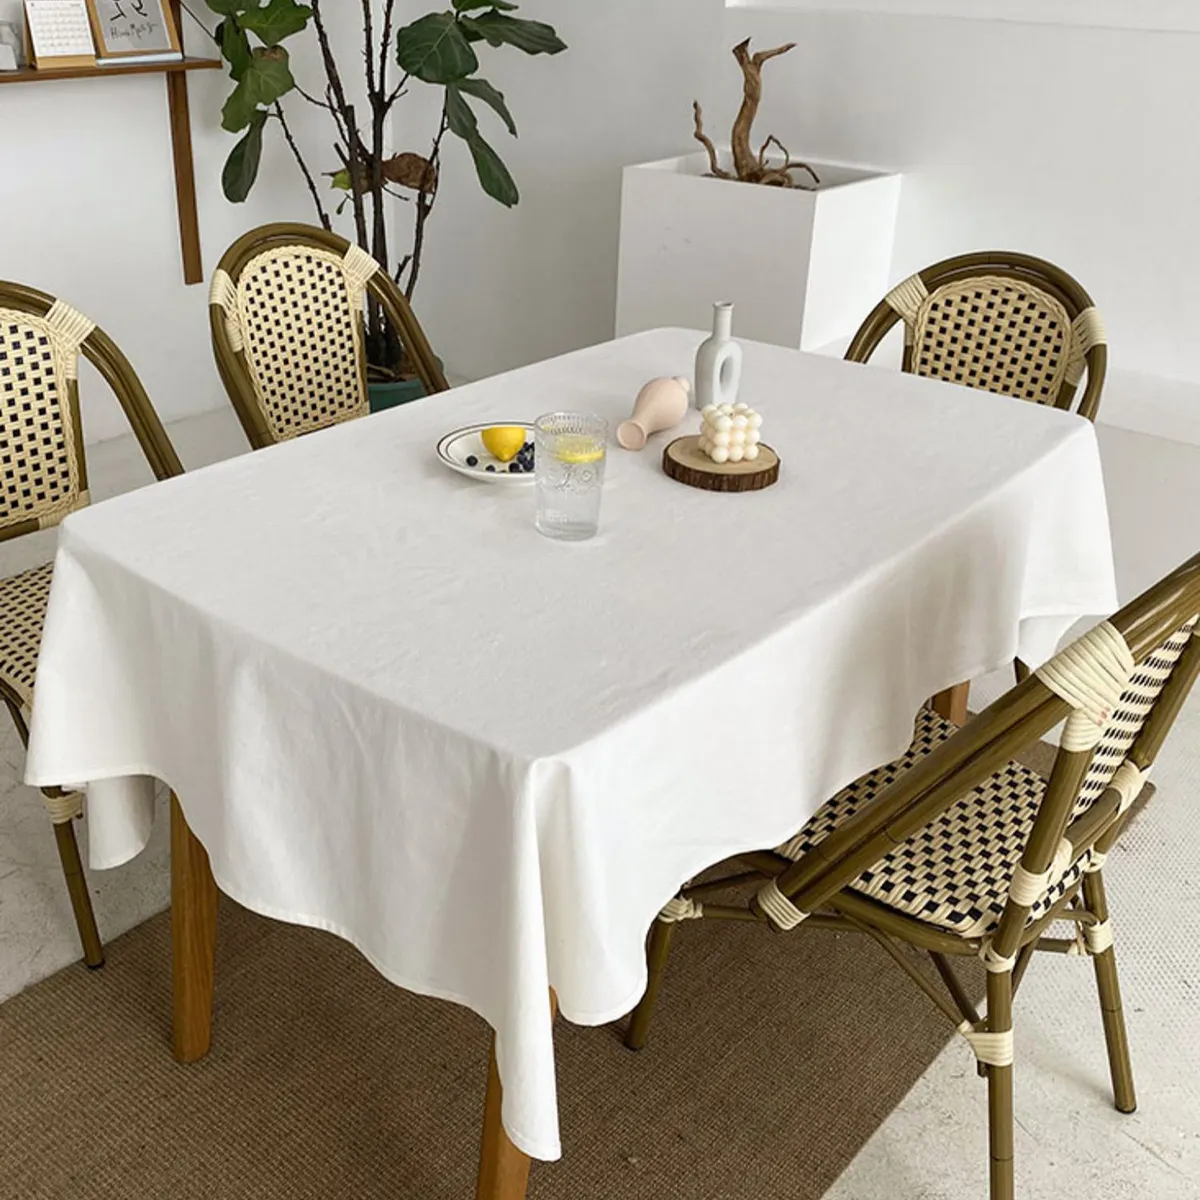 Hemstitch ผ้าปูโต๊ะผ้าฝ้ายสีขาว,ผ้าปูโต๊ะสี่เหลี่ยมทรงกลมสำหรับตกแต่งบ้านโรงแรมงานแต่งงาน